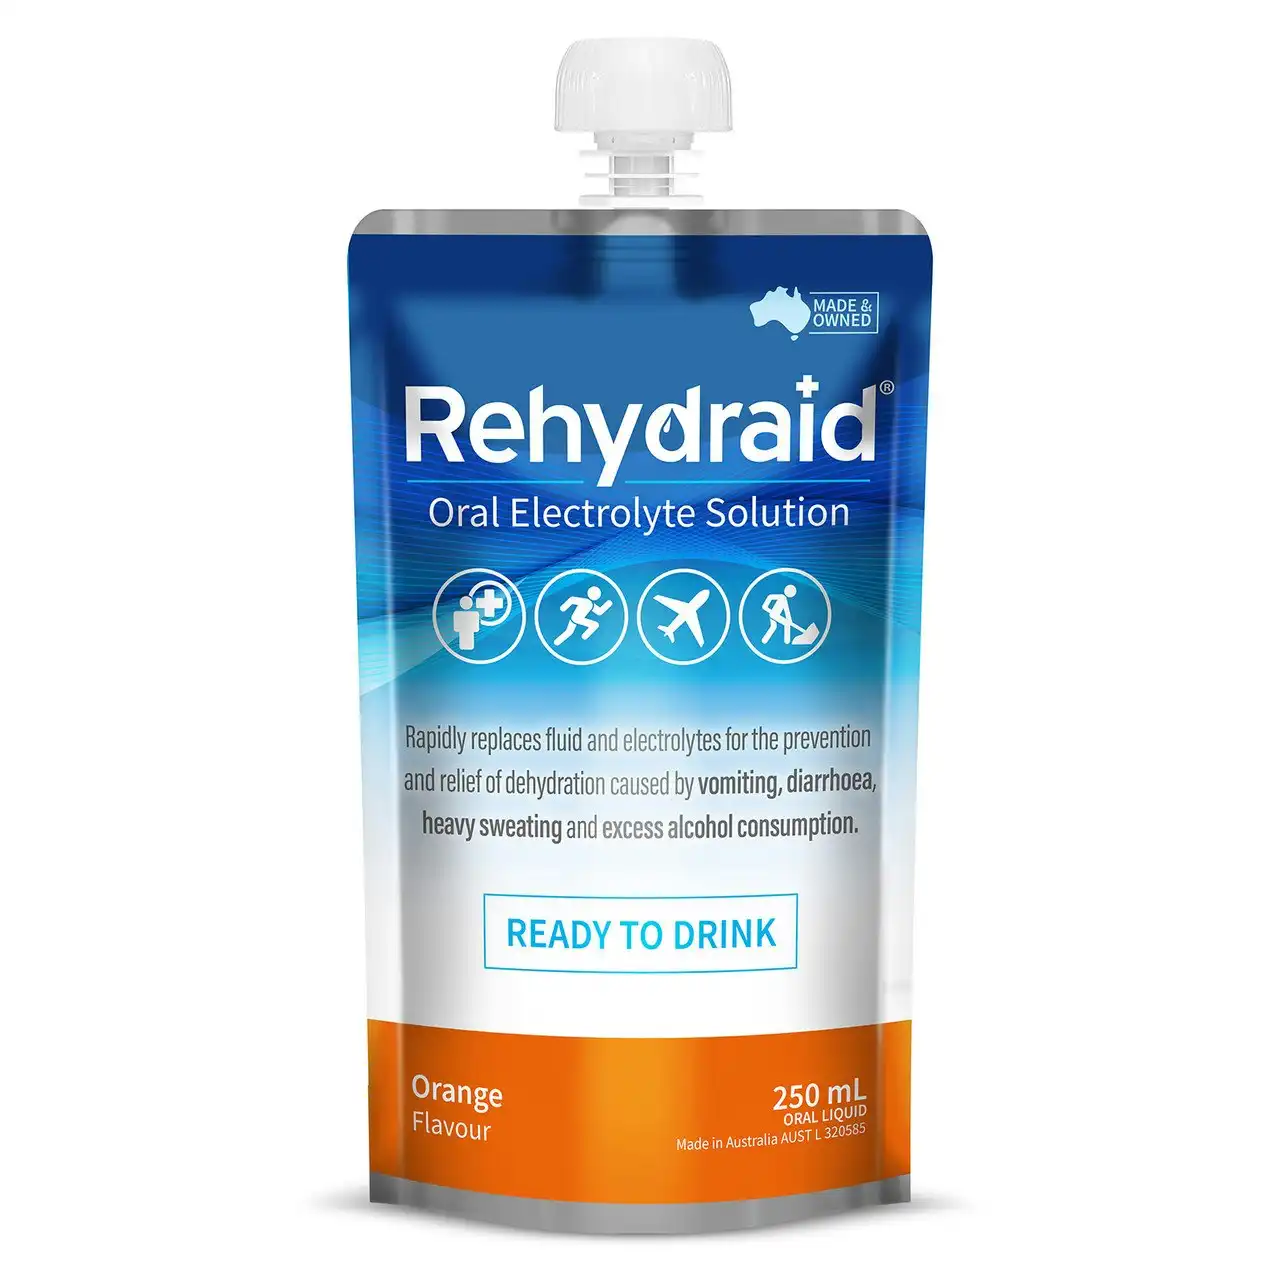 Rehydraid Oral Electrolyte Solution Orange Flavour 250ml